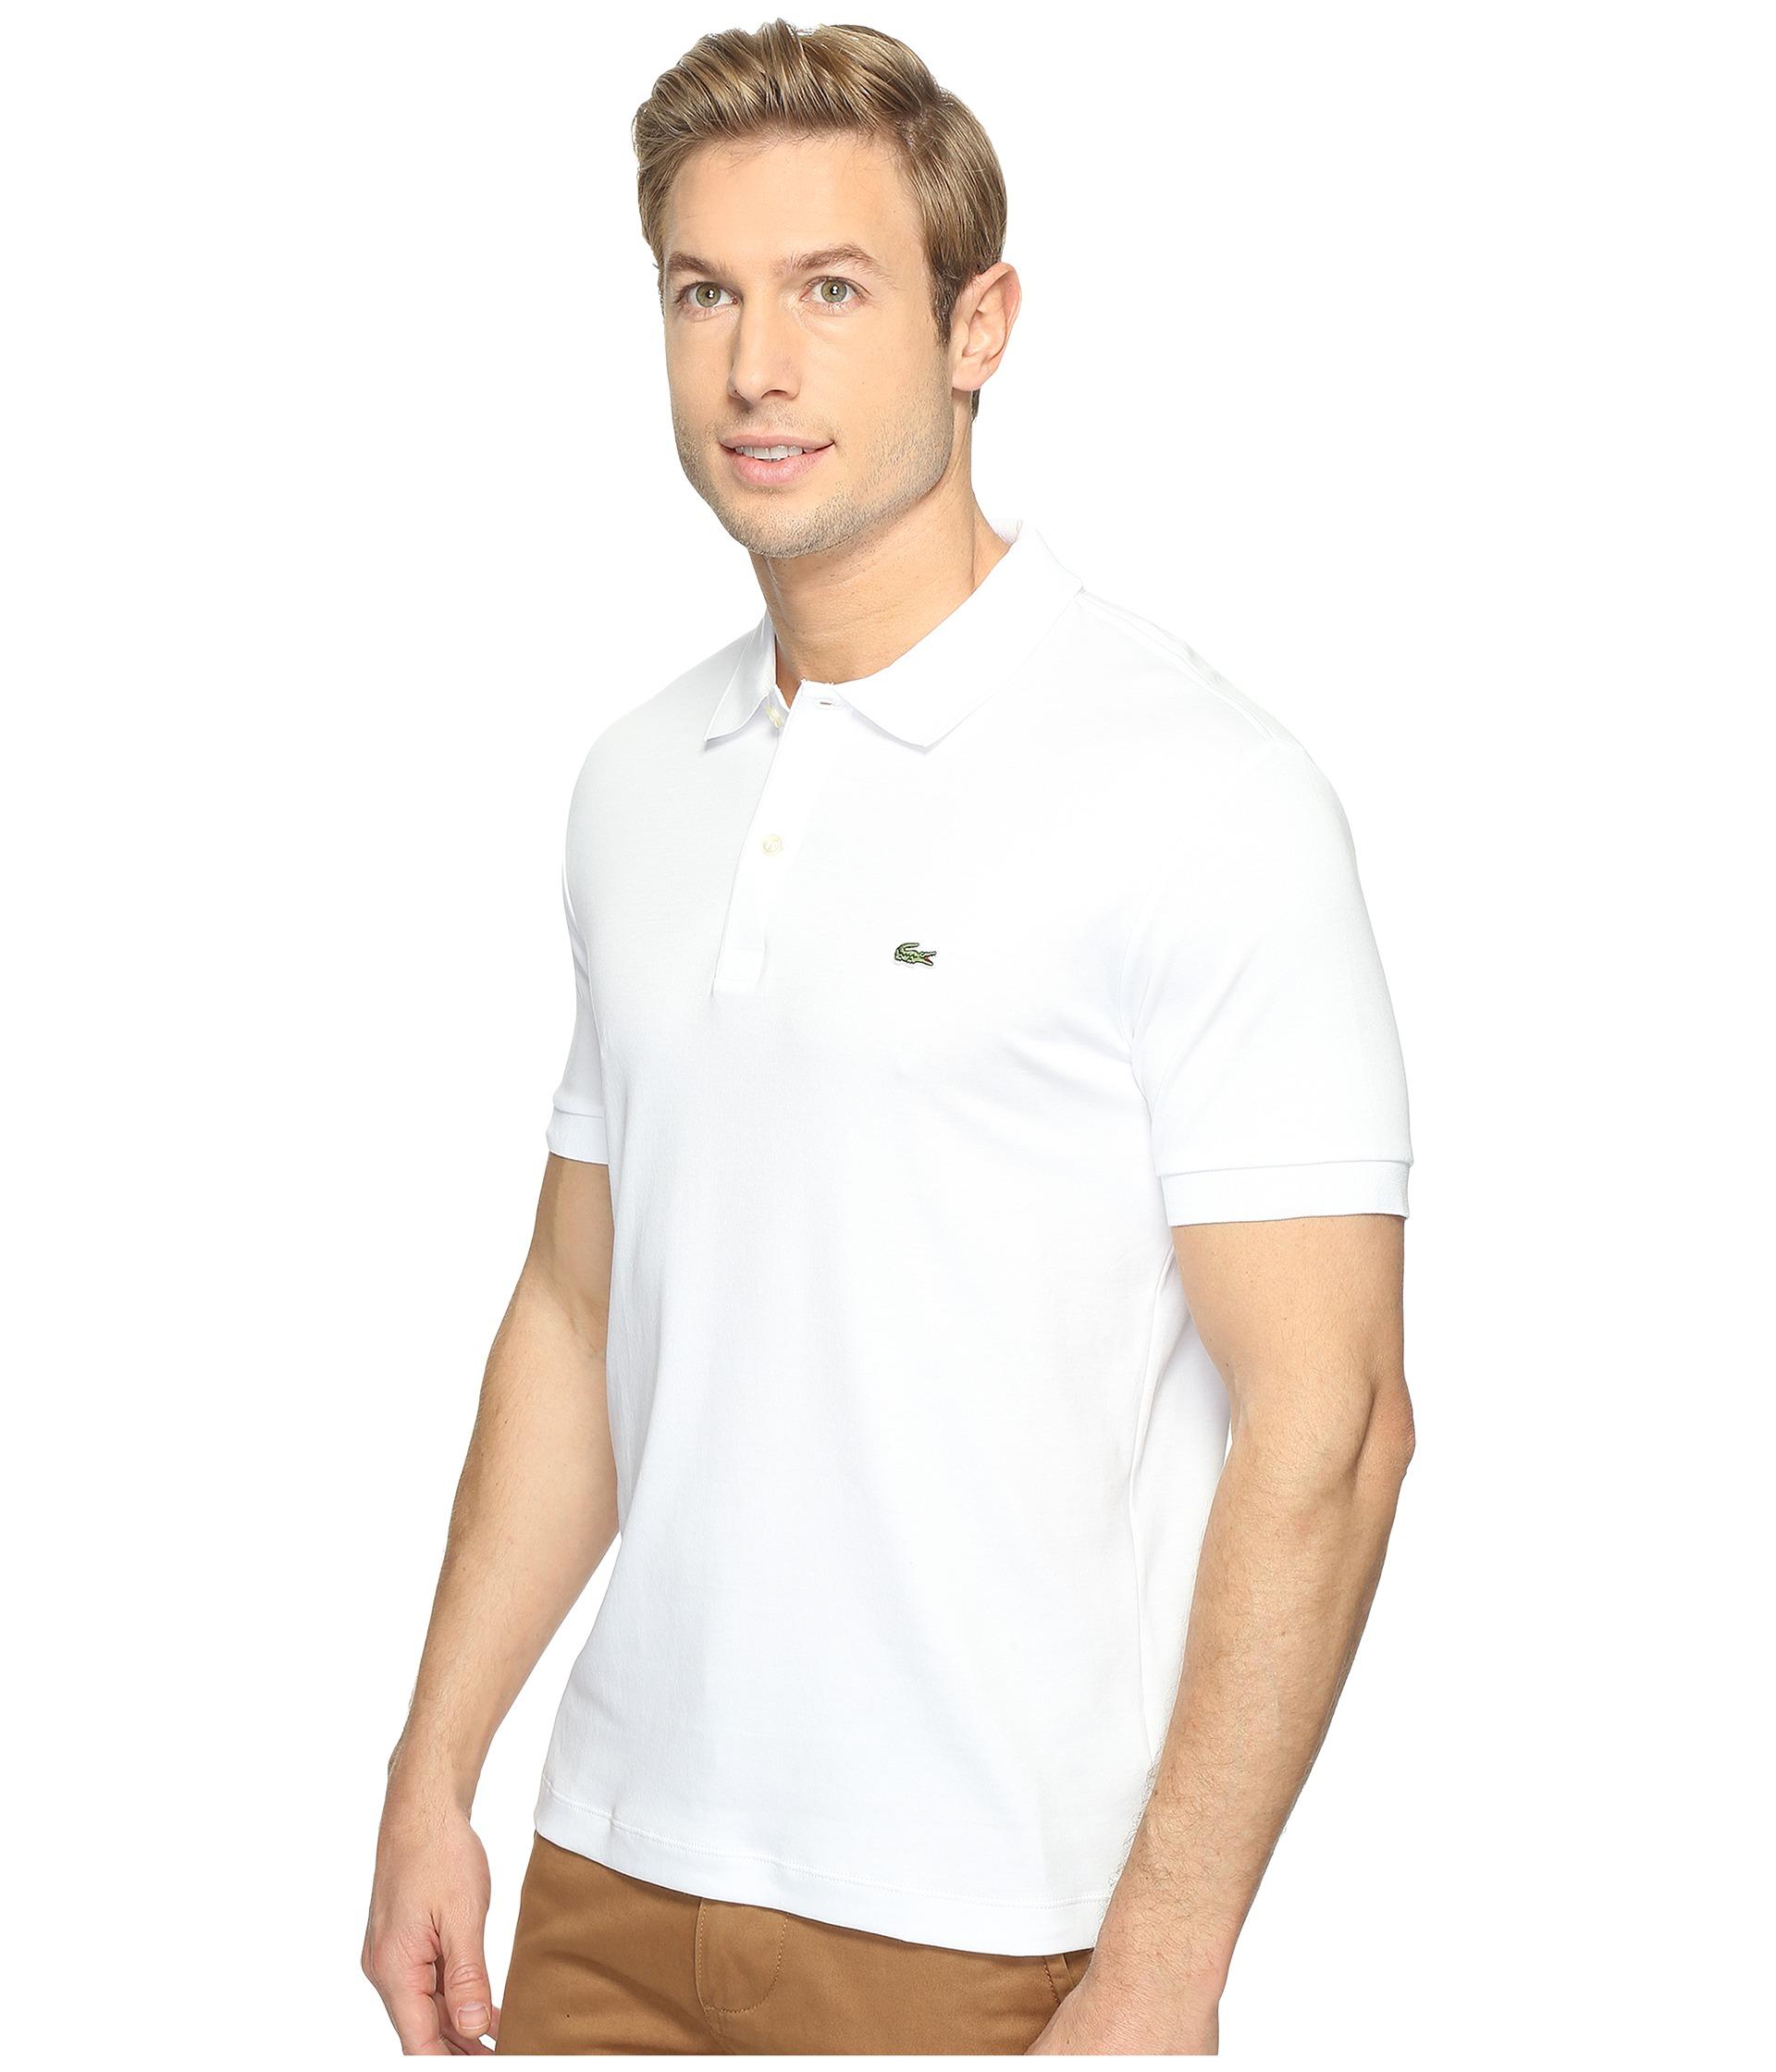 Lyst - Lacoste Short Sleeve Jersey Interlock Regular in White for Men